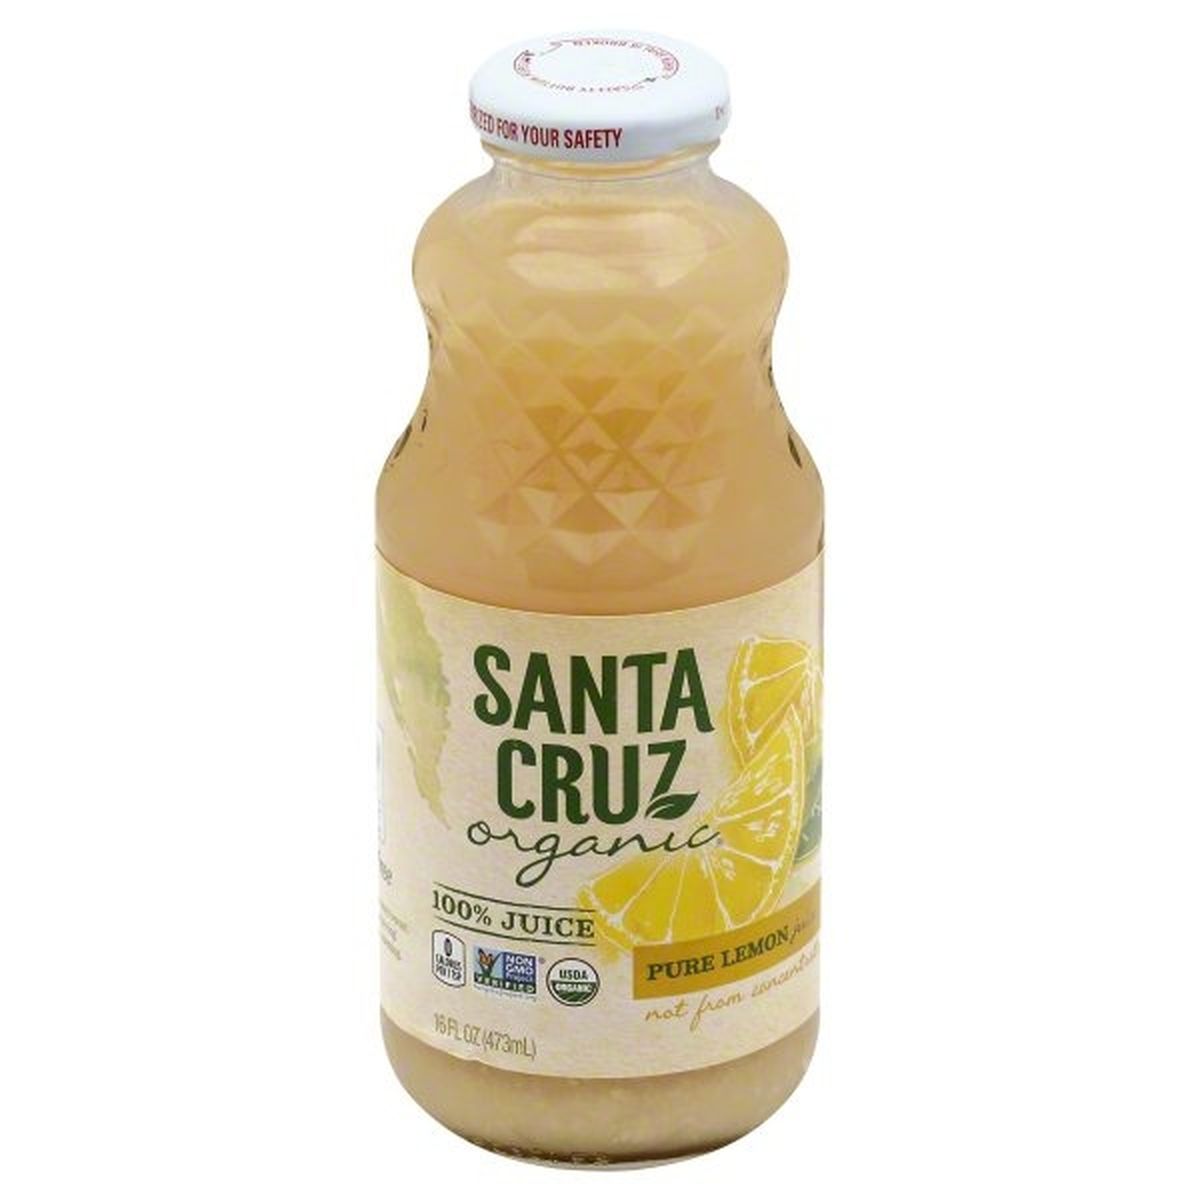 Calories in Santa Cruz Organic Organic 100% Juice, Pure Lemon